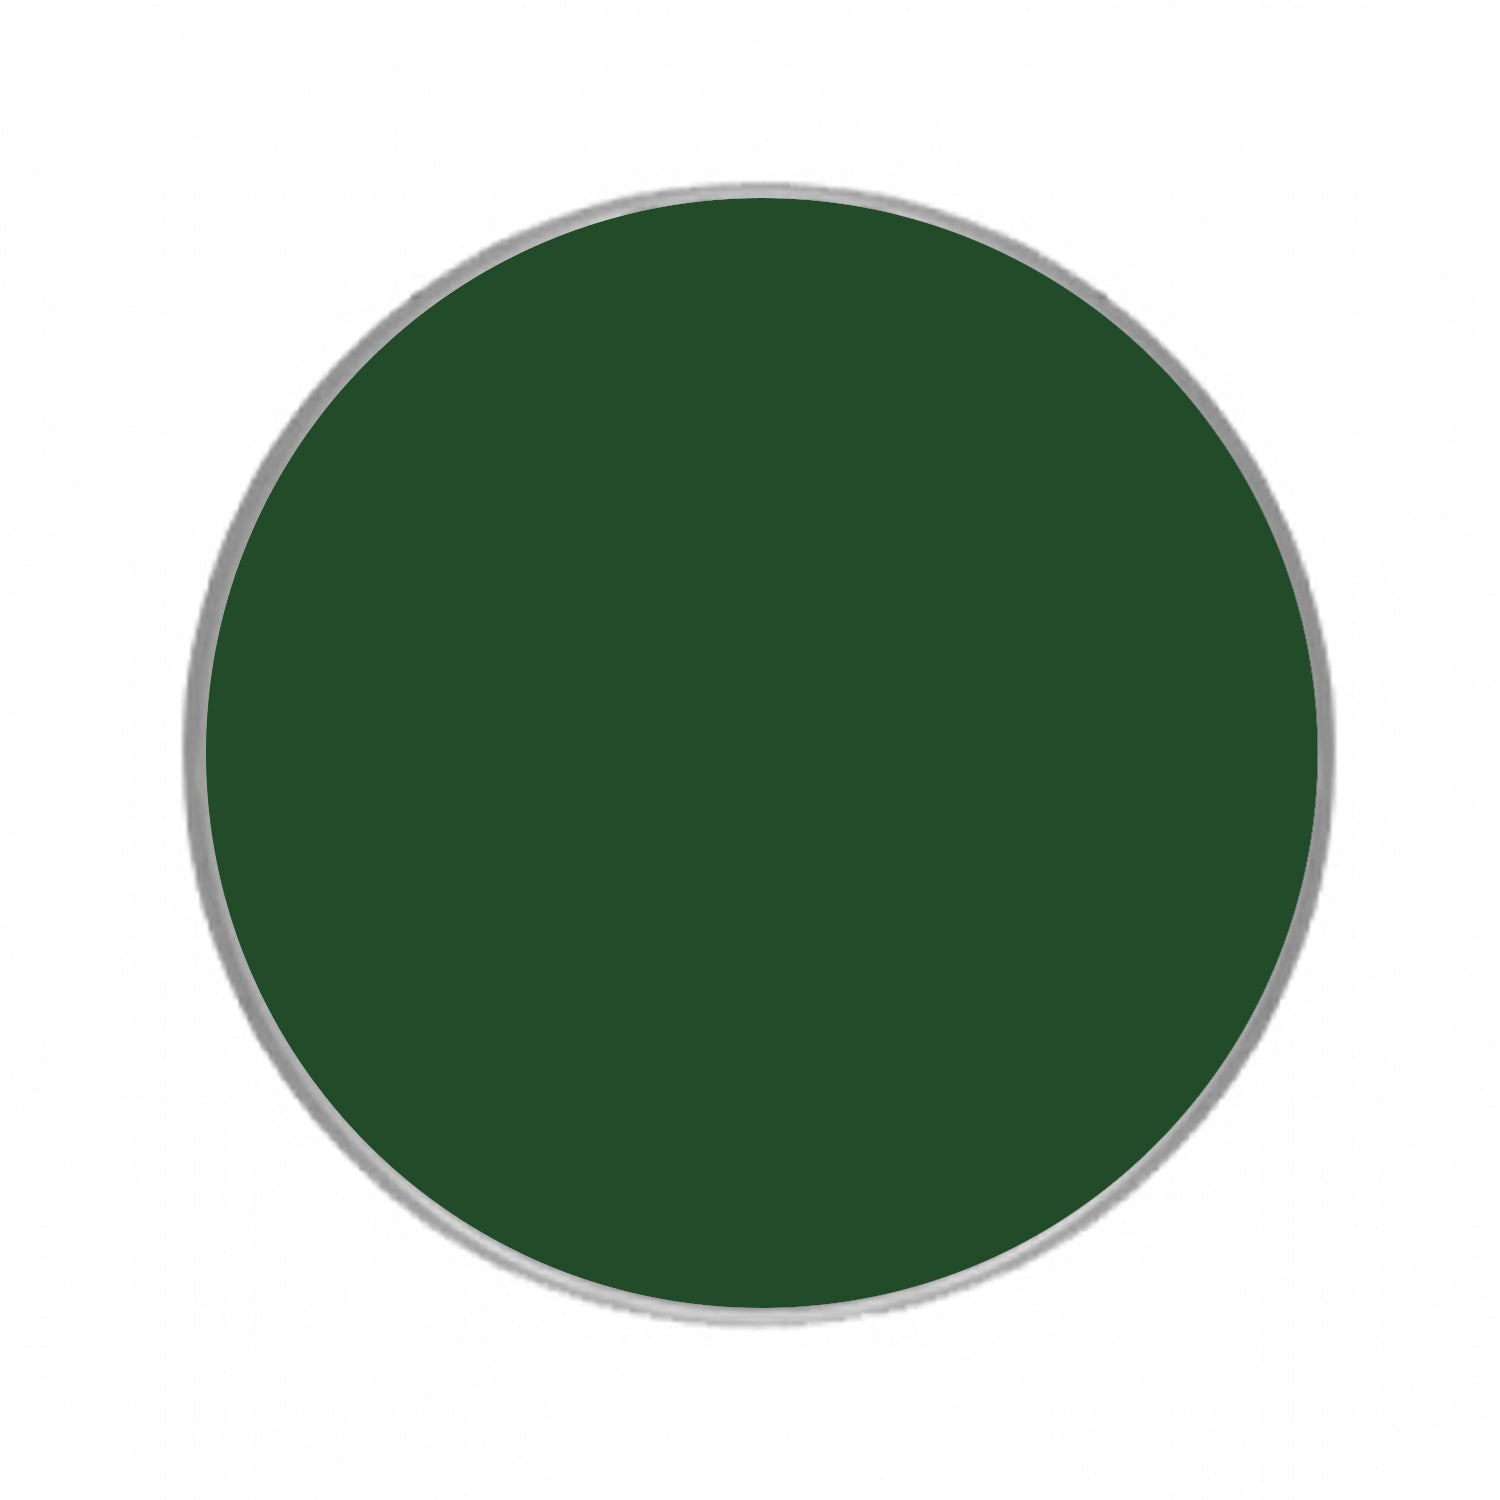 Kryolan Aquacolor Green Face Paint Refills - Dark Green 512 4 ml